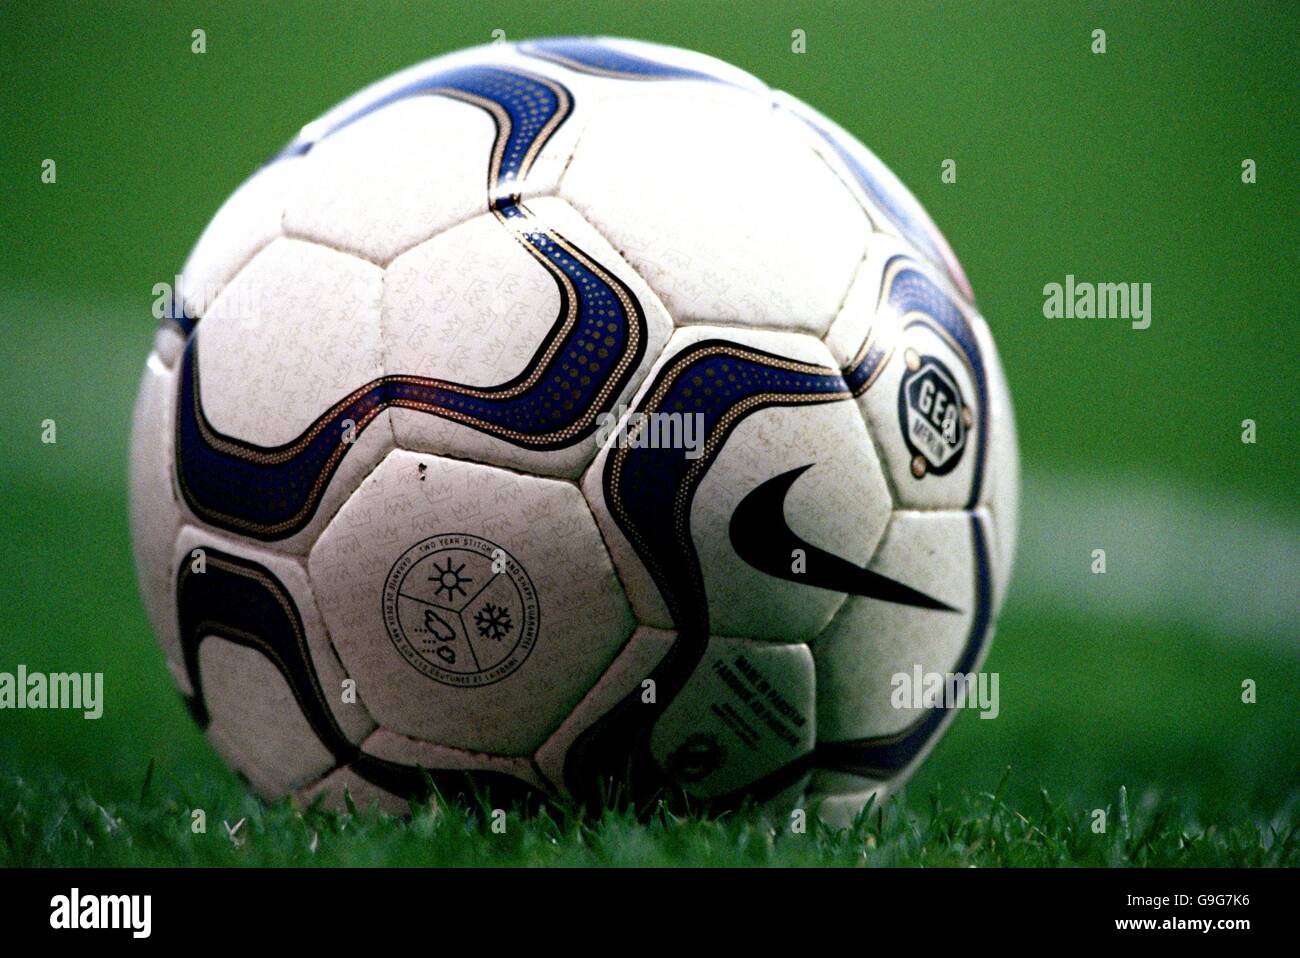 Football - FA Carling Premiership - West Ham United / Aston Villa.Le ballon Nike Geo, le ballon officiel de la FA Carling Premiership Banque D'Images